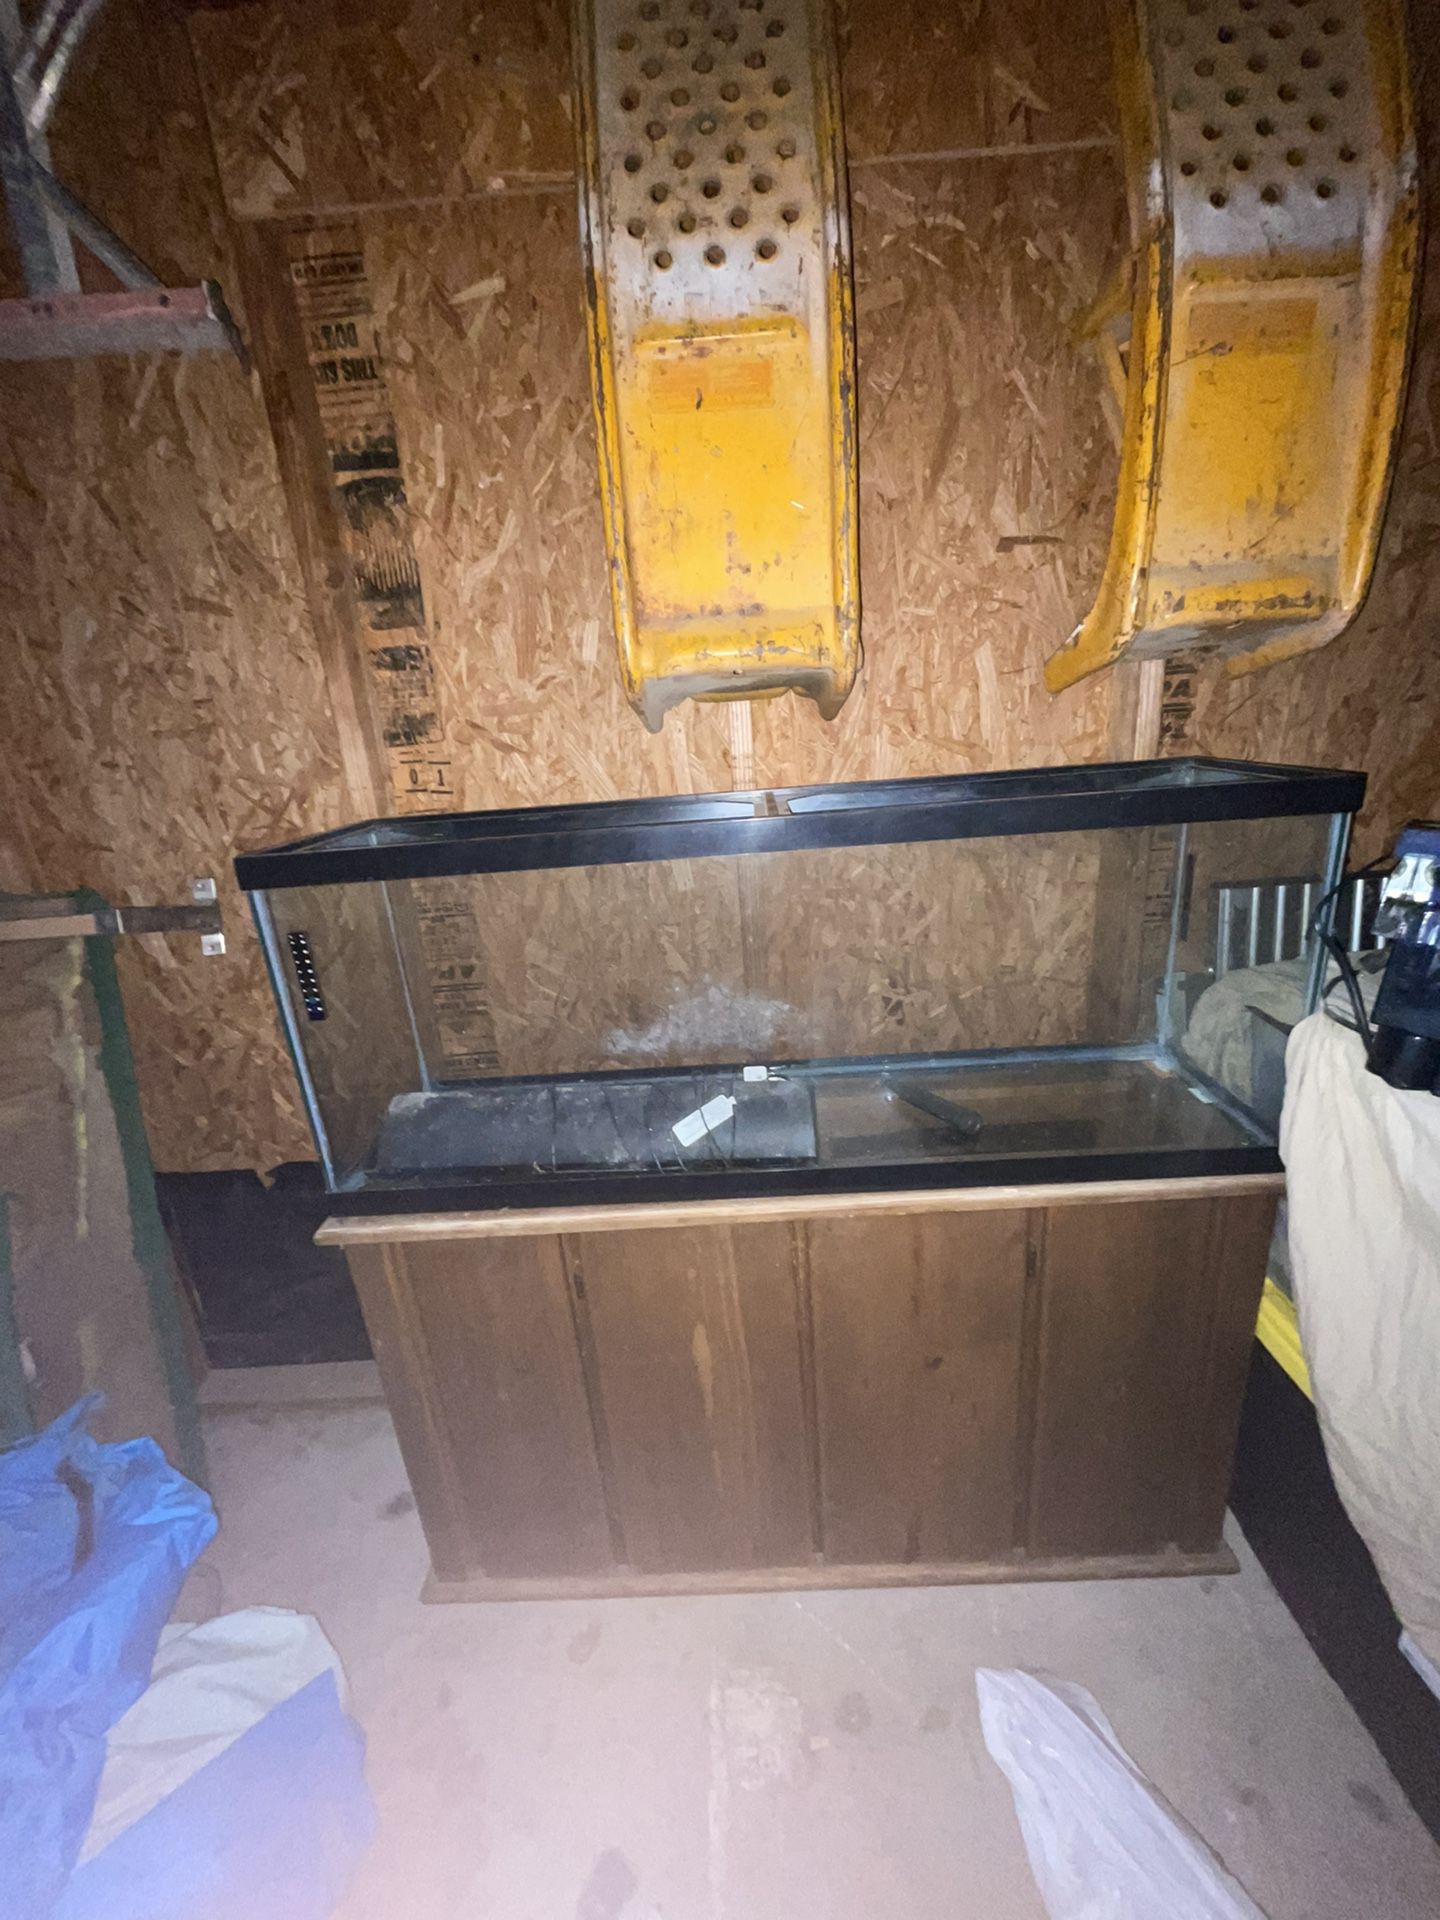 Salt water fish tank!